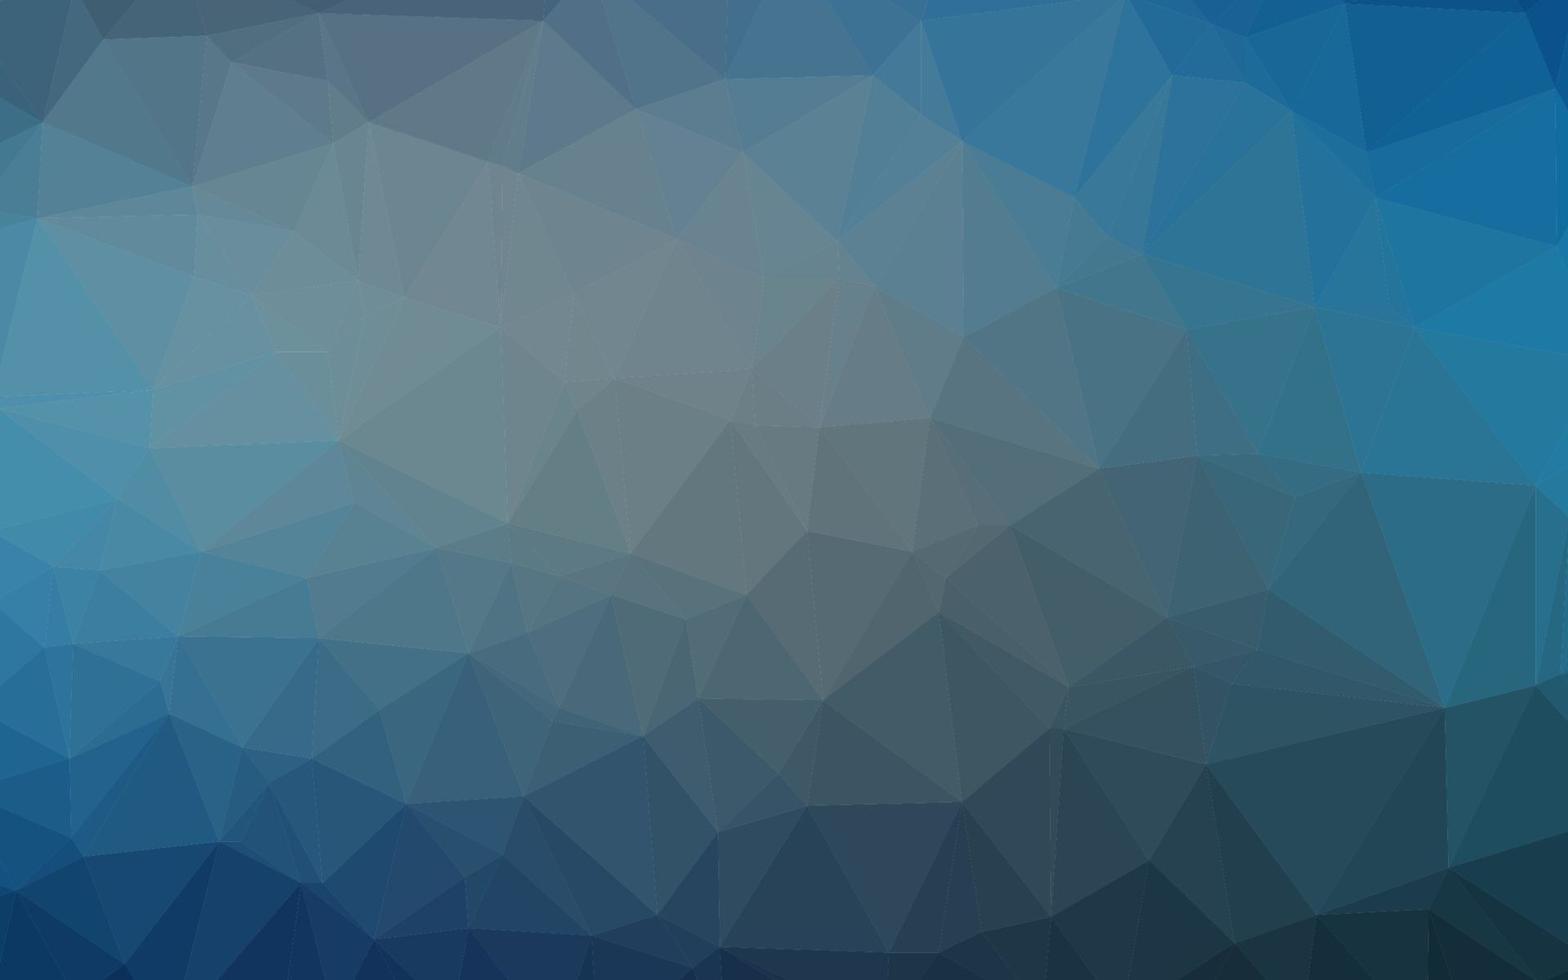 Light BLUE vector polygonal background.